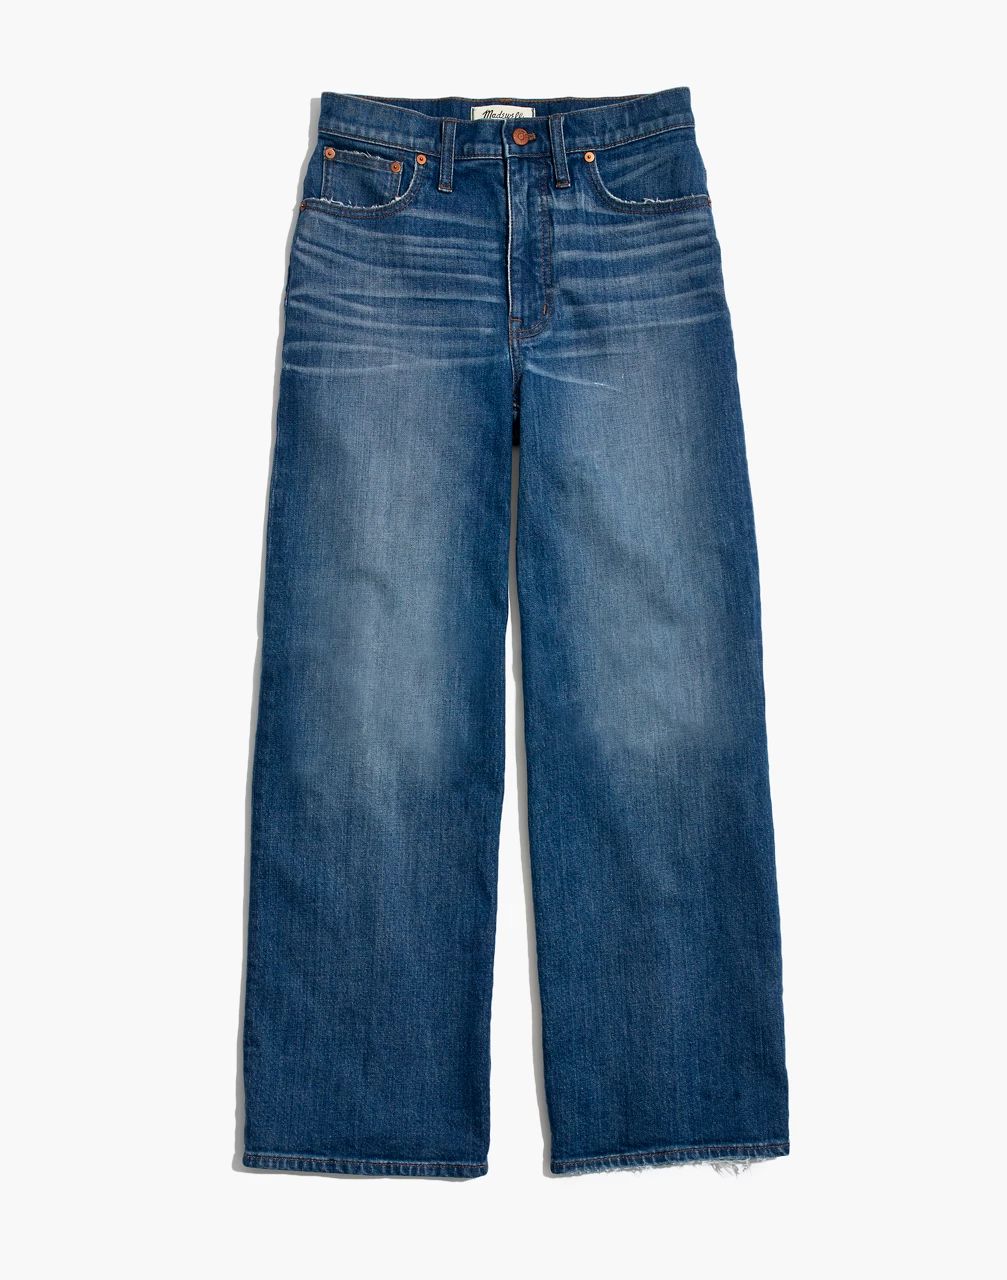 Wide-Leg Crop Jeans in Finney Wash | Madewell